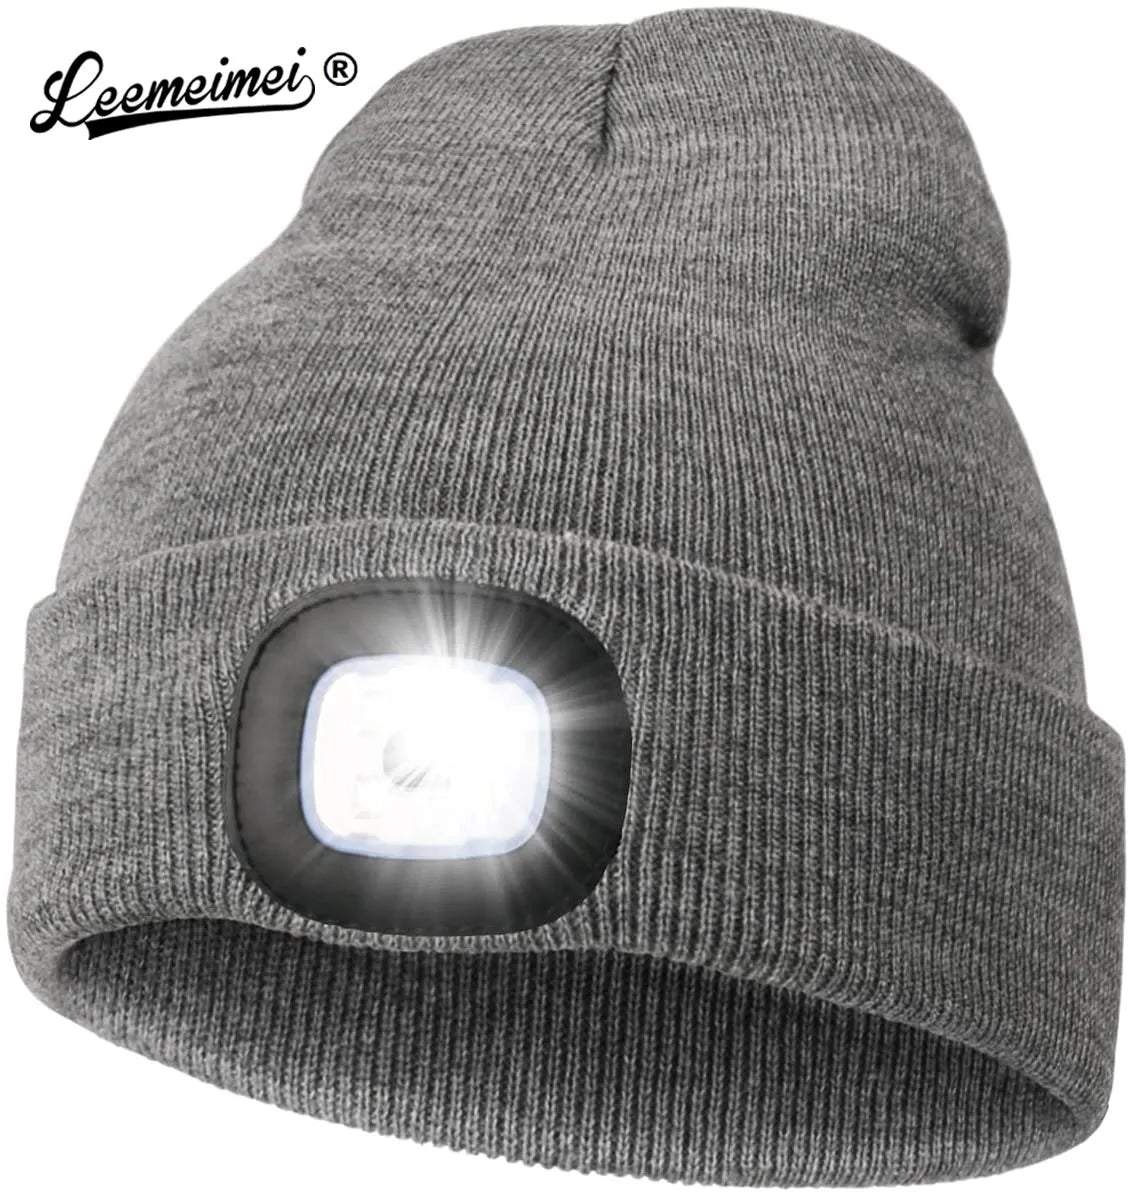 LightFusion: Unisex LED Light Knitted Hat